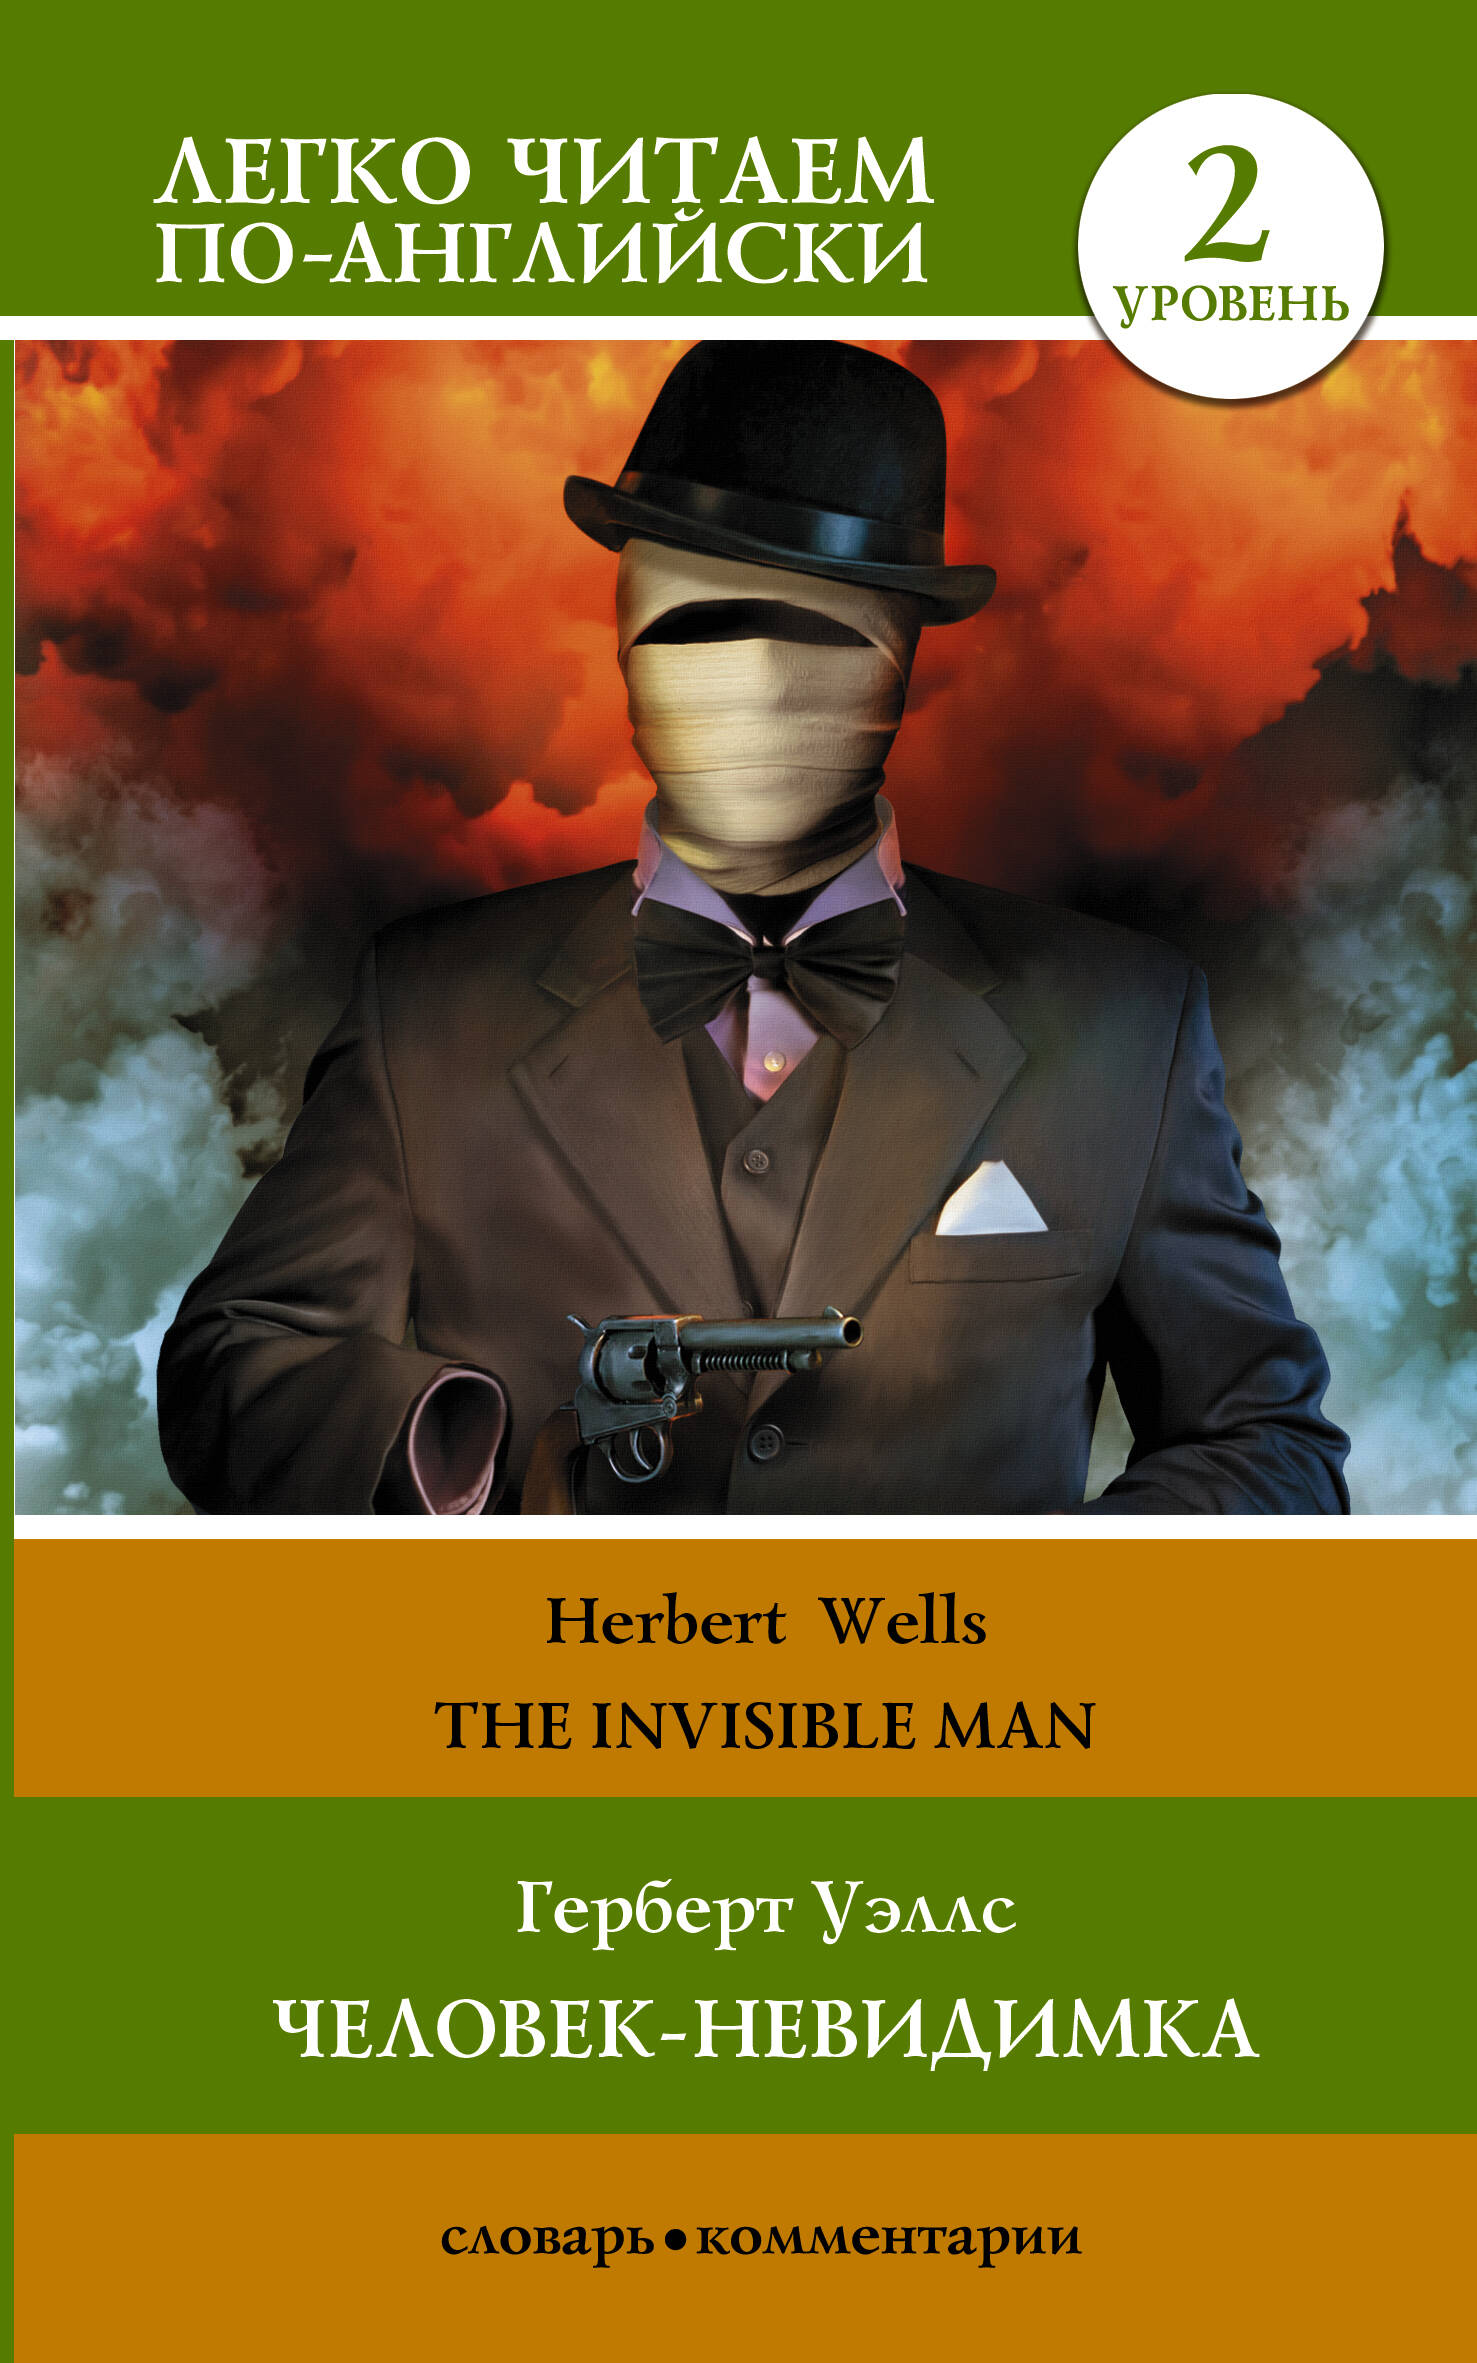 Уэллс Герберт Джордж Герберт Уэллс. Человек-невидимка = H.G. Wells. The Invisible Man. Уровень 2